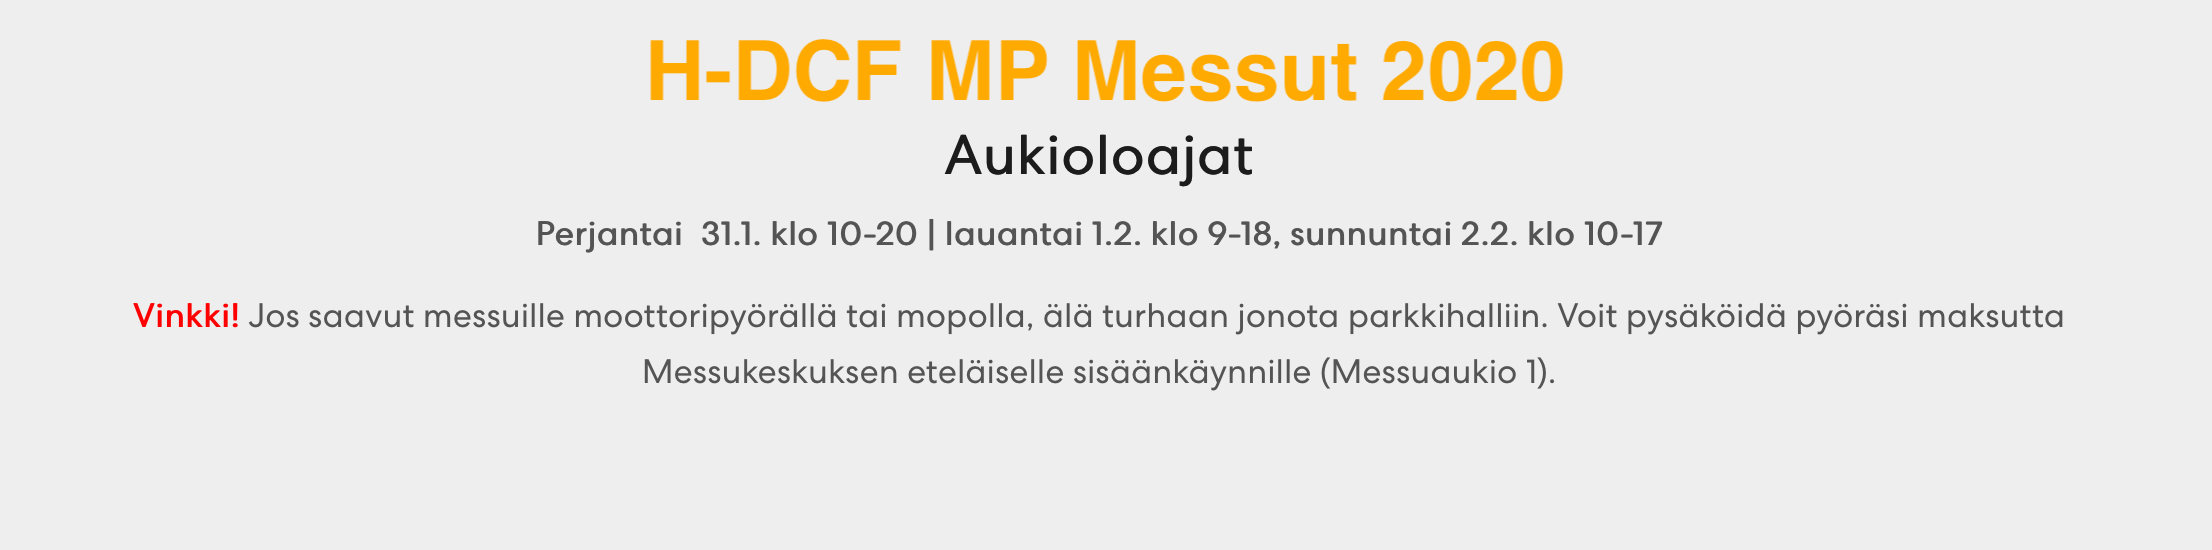 MP Messut 2020